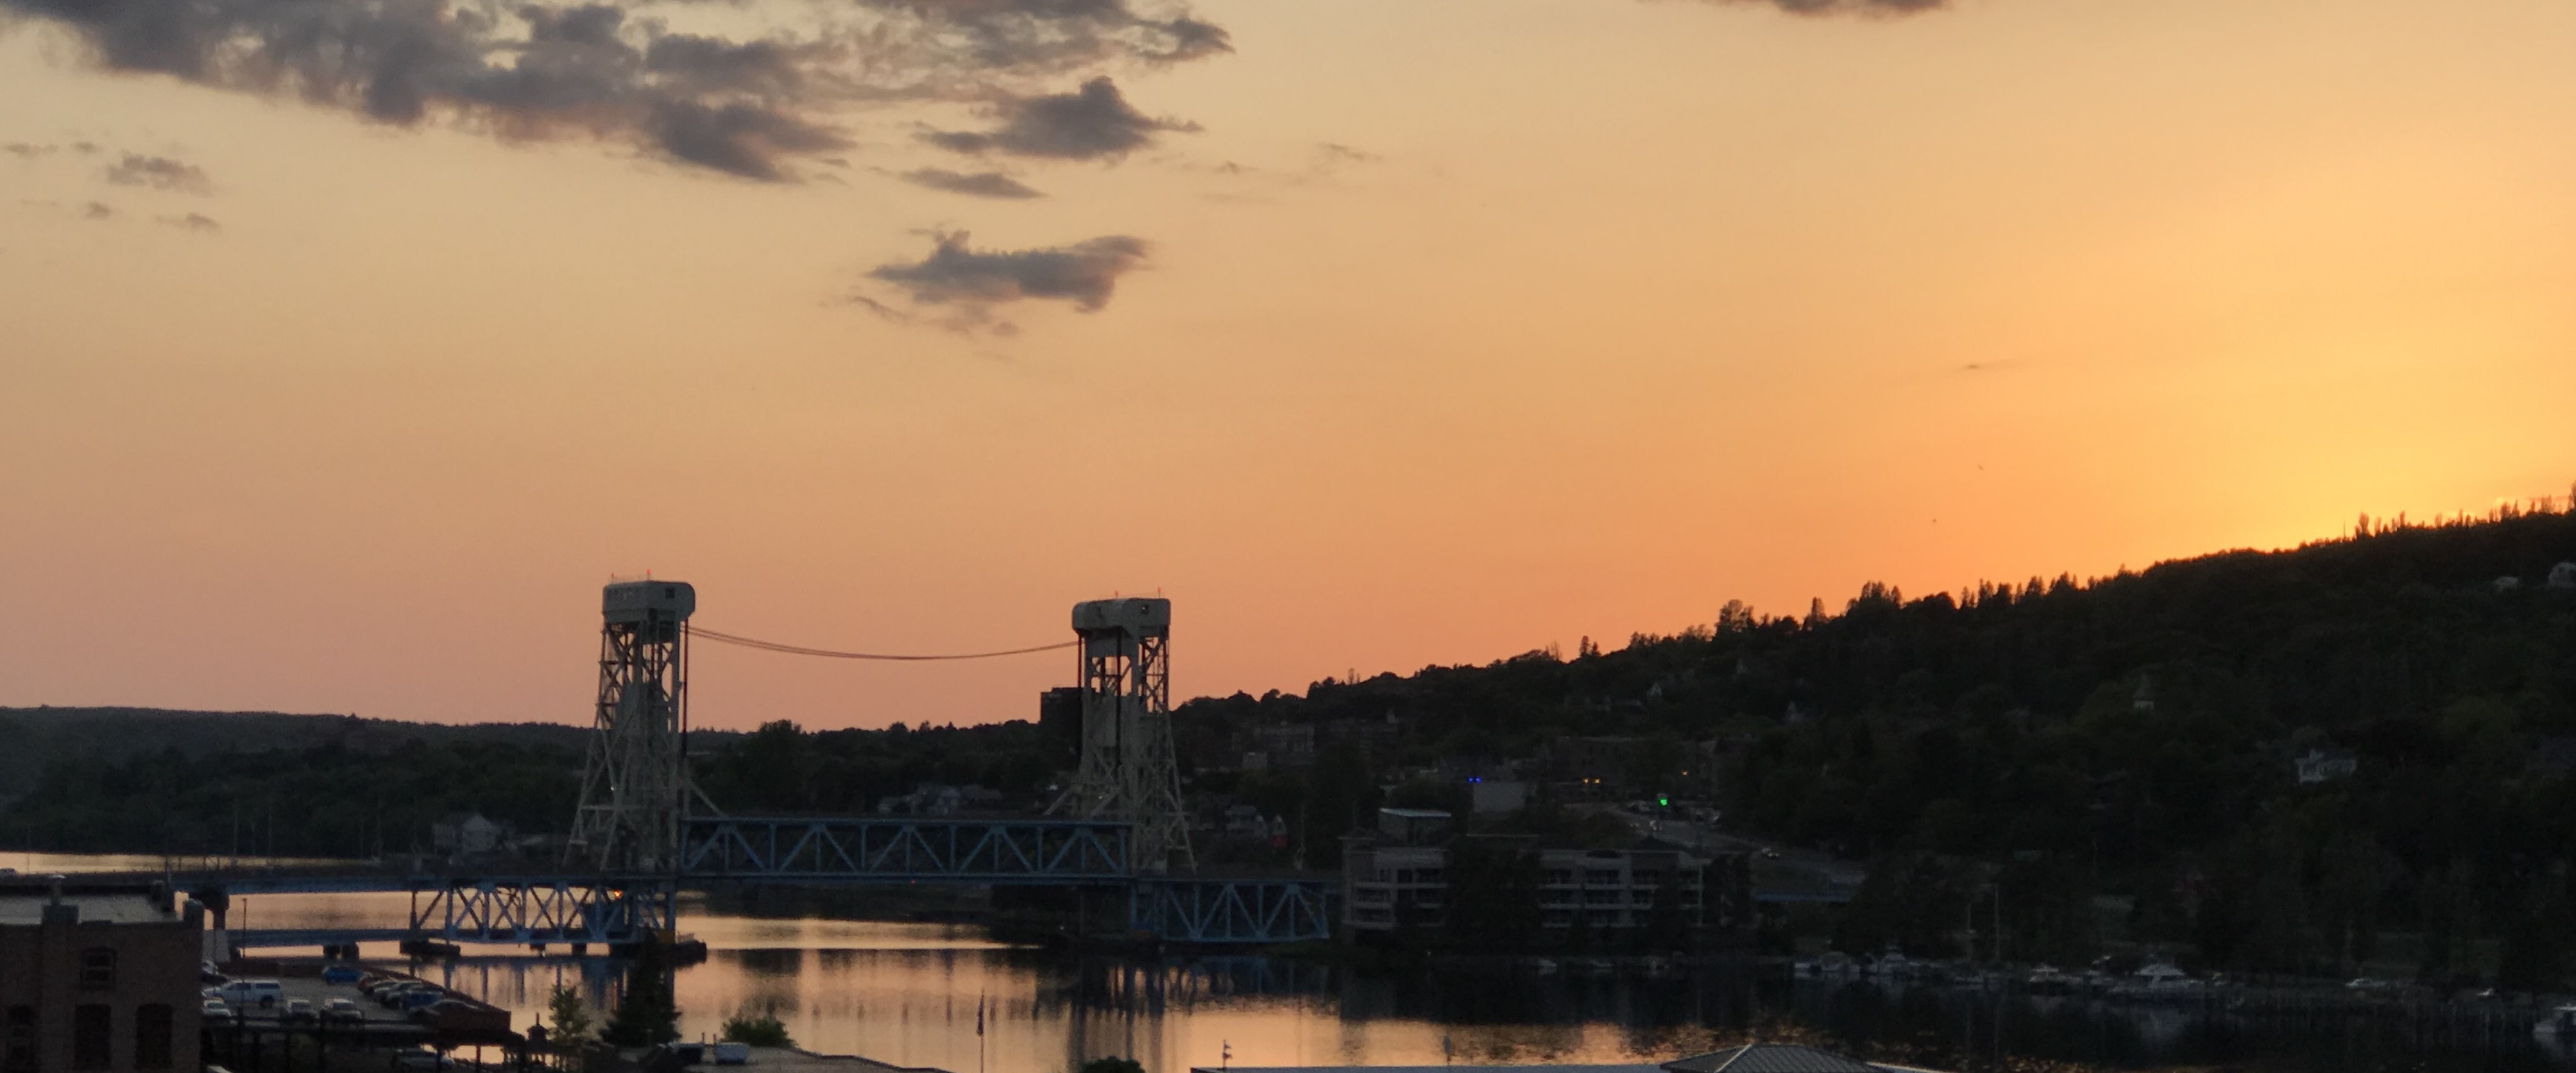 Portage Lift Bridge at sunset